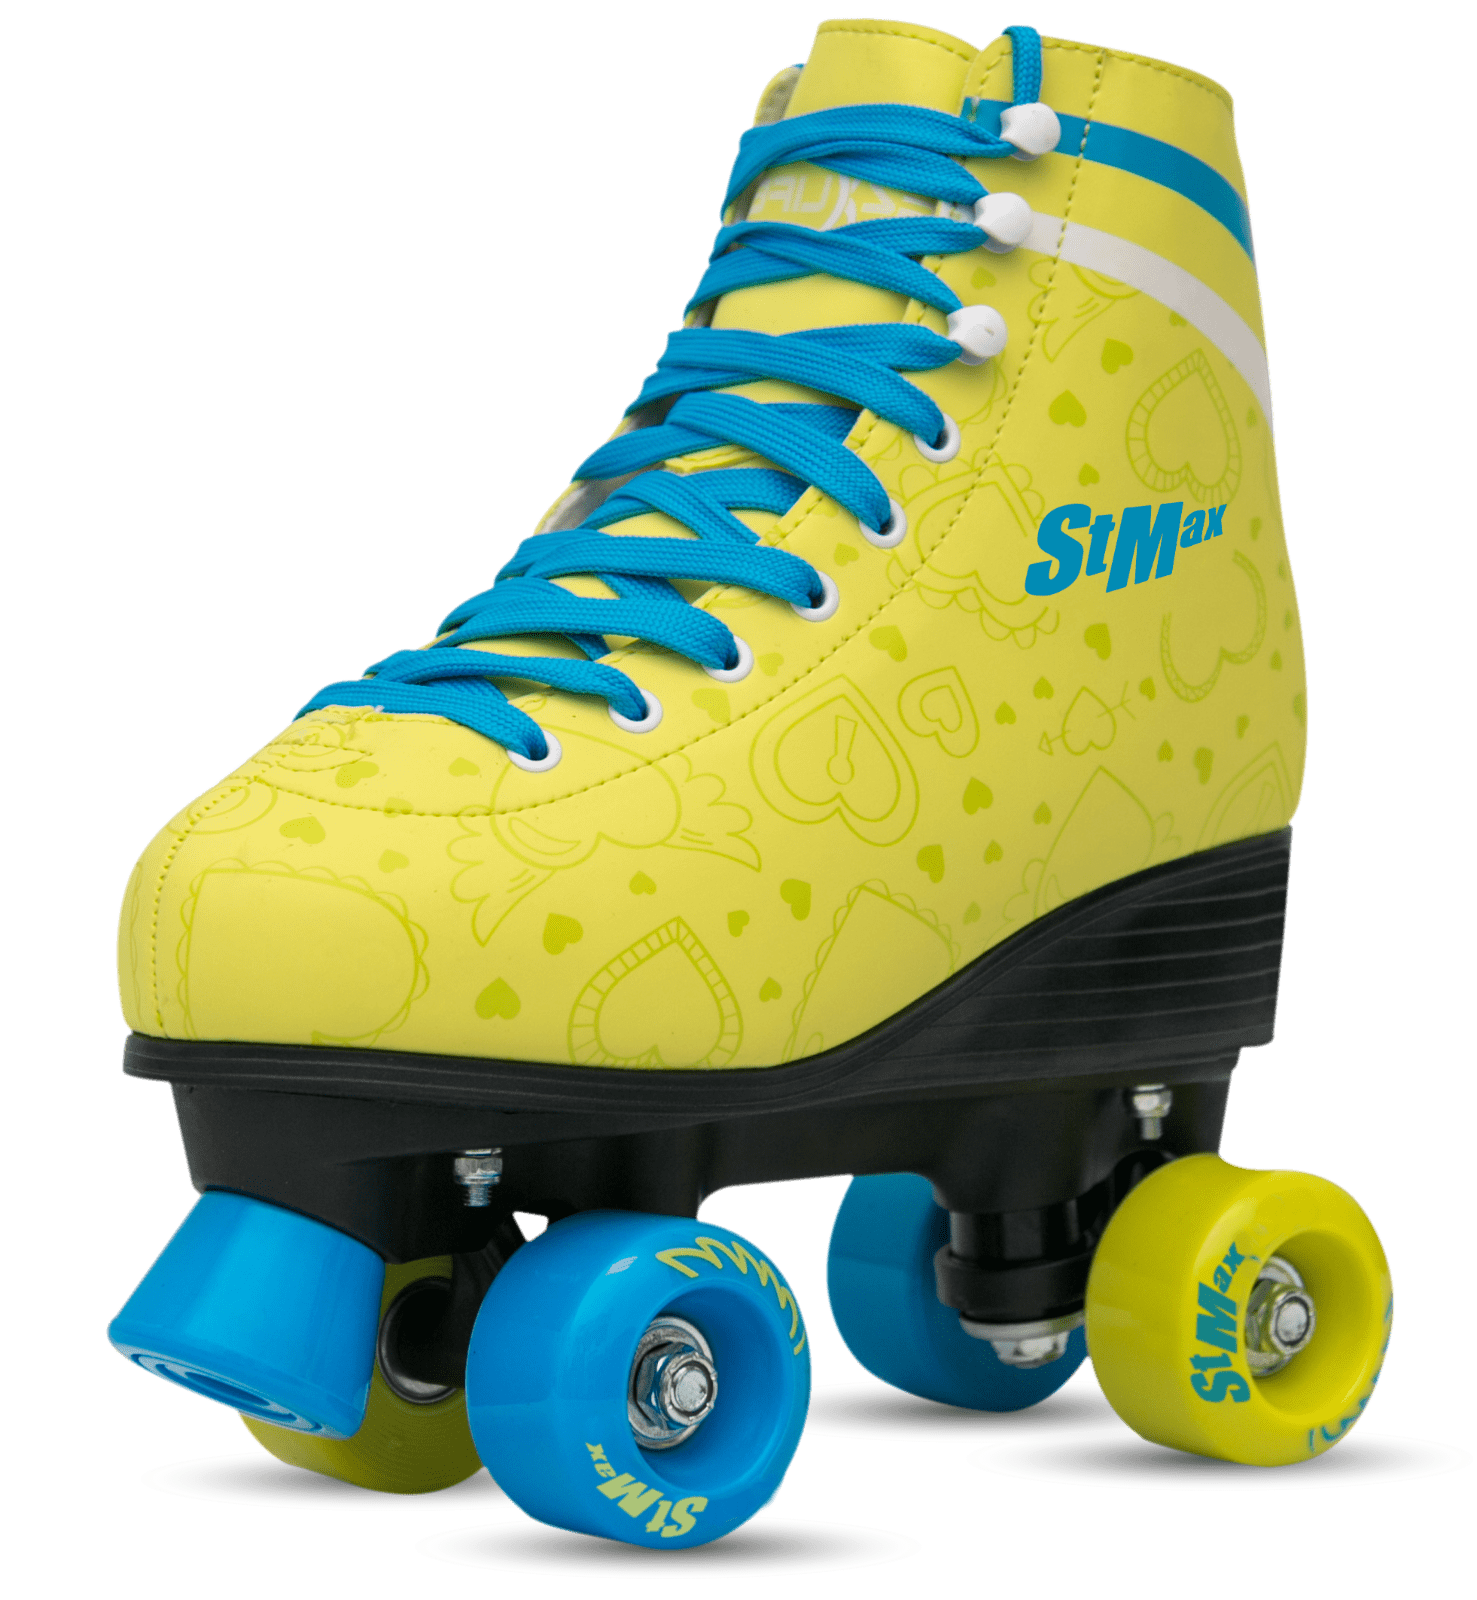 Stmax Quad Roller Skates for Women Size 6 Derby classic vintage flower print 